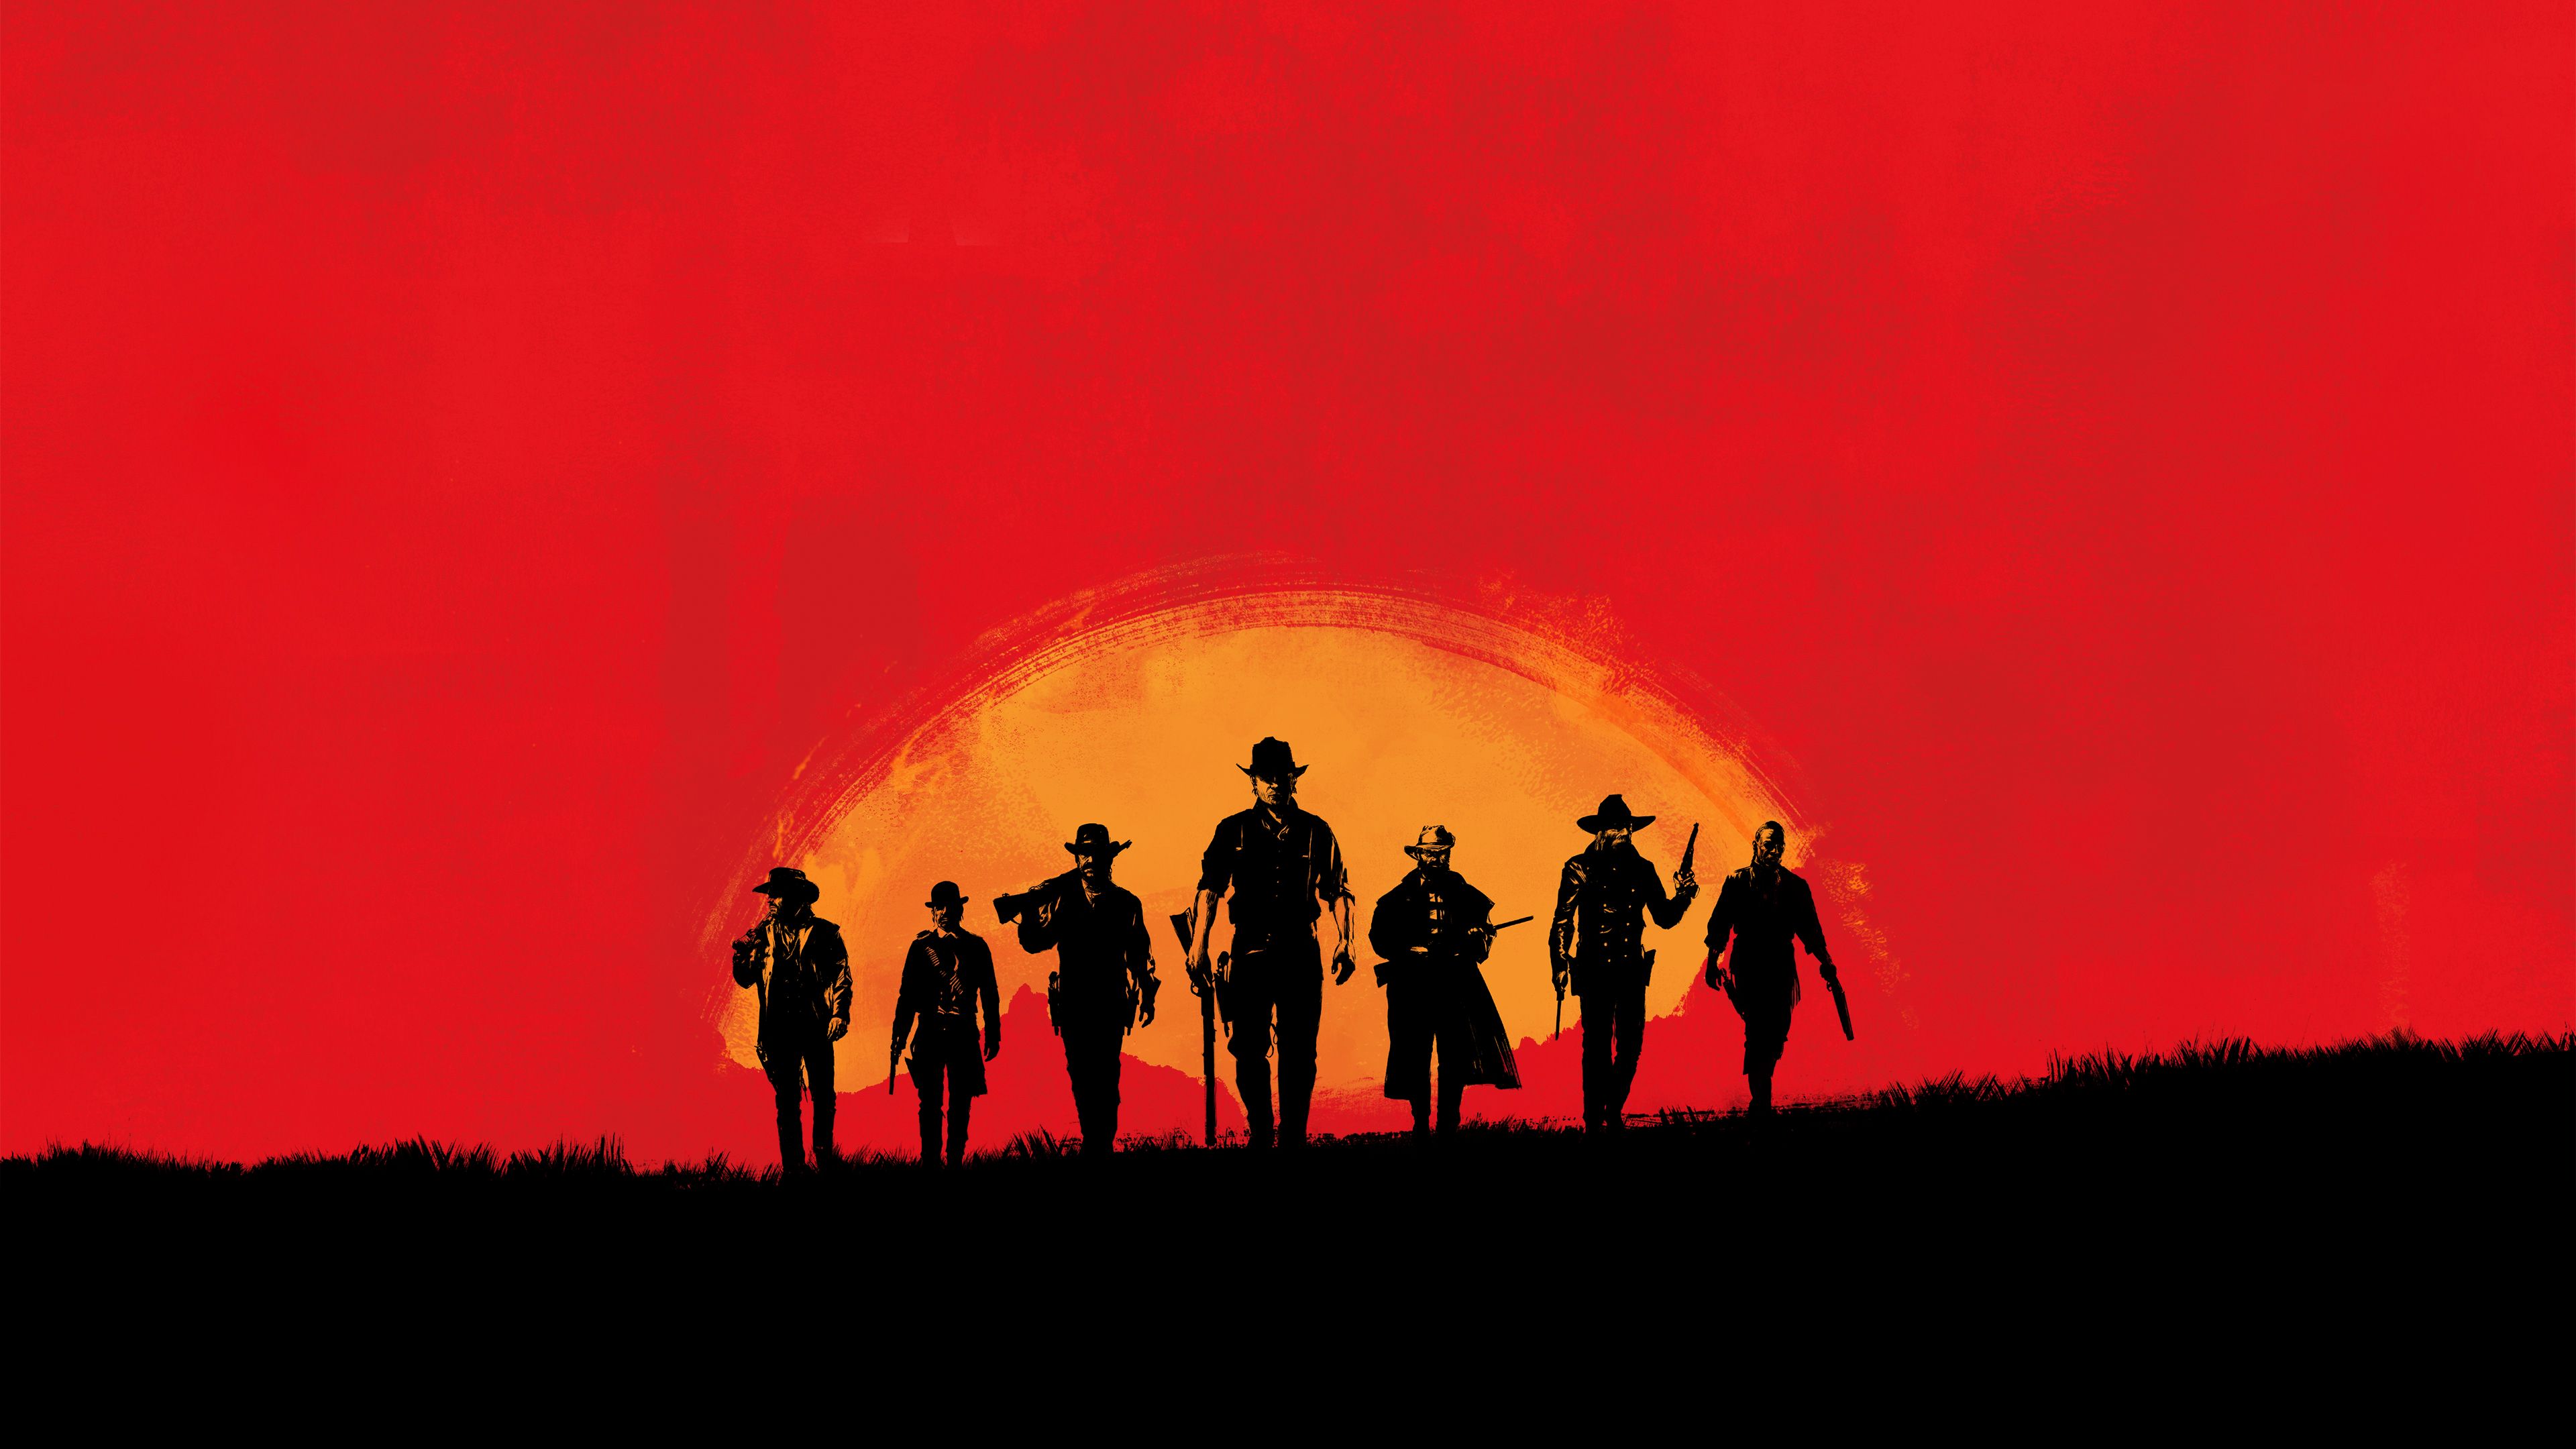 5K Red Dead Redemption 2 Wallpaper